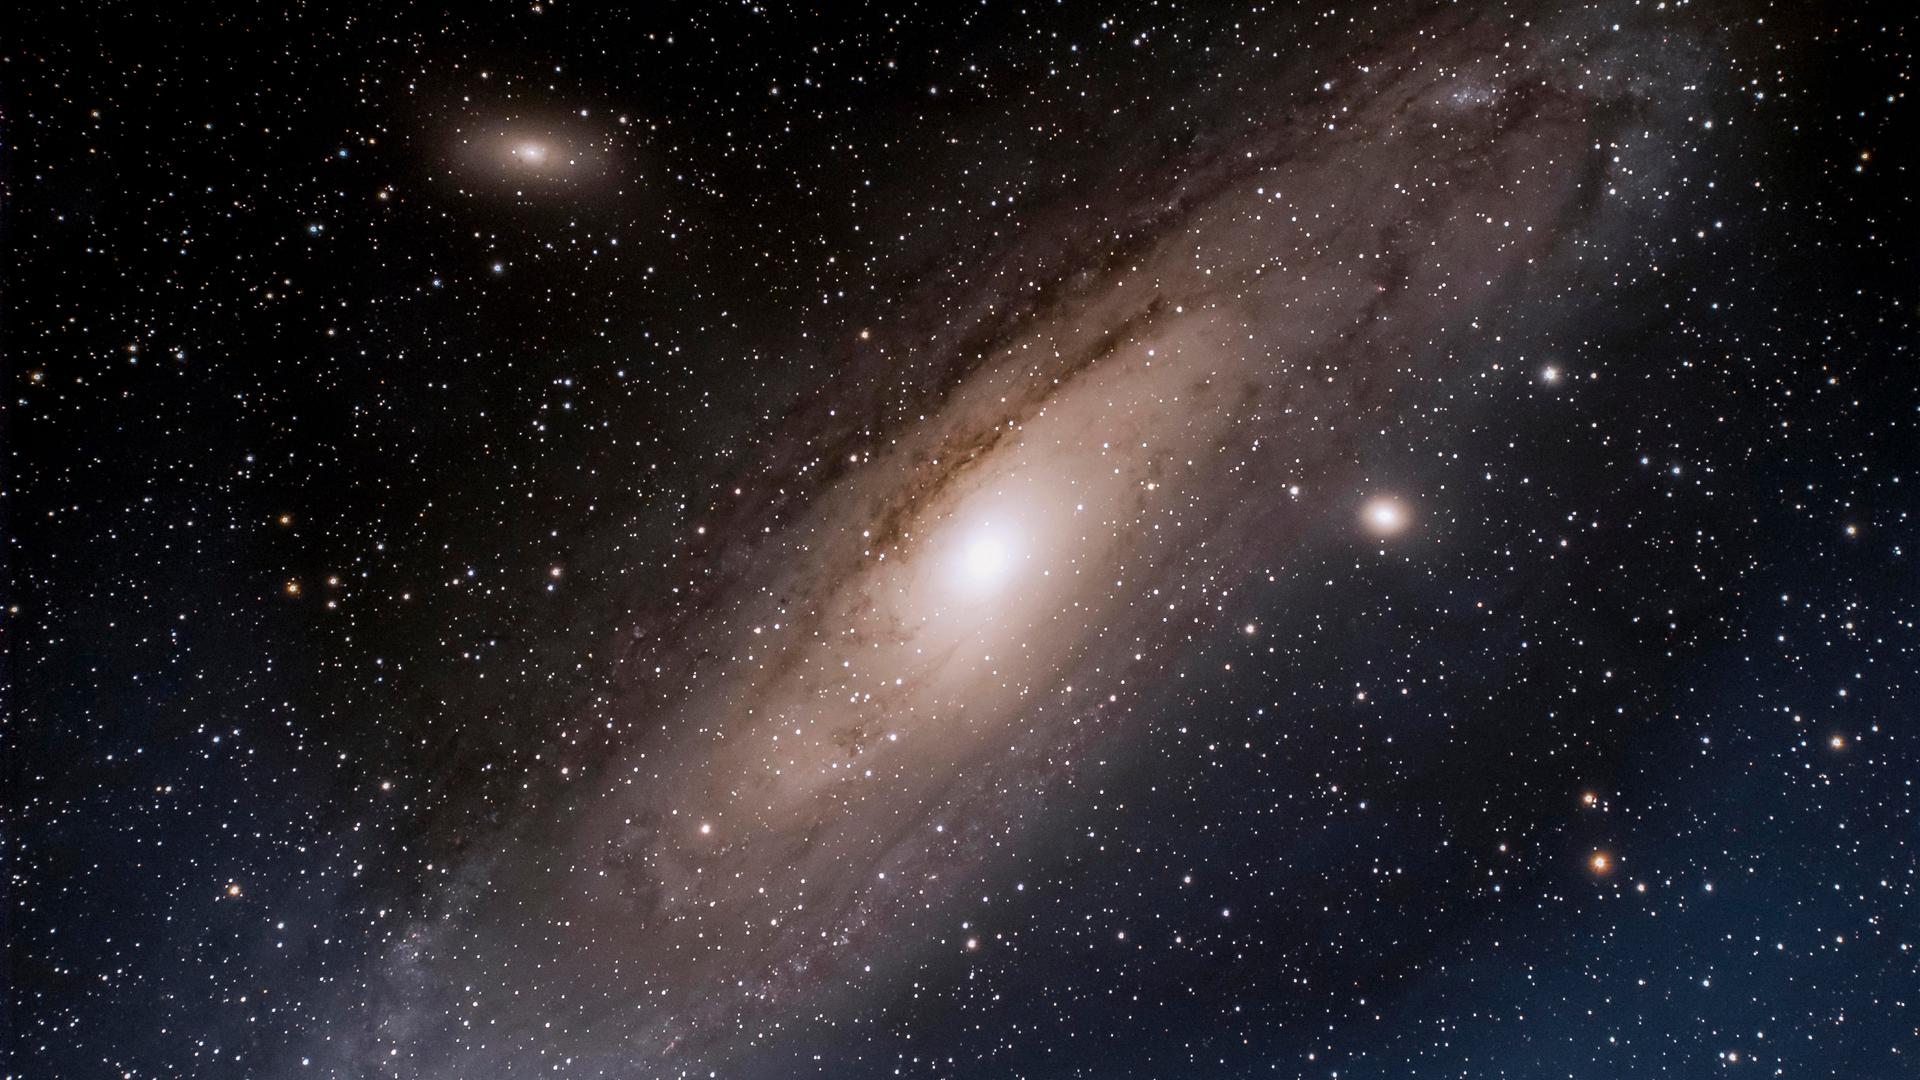 Andromedagalaxie und Sternbild Andromeda